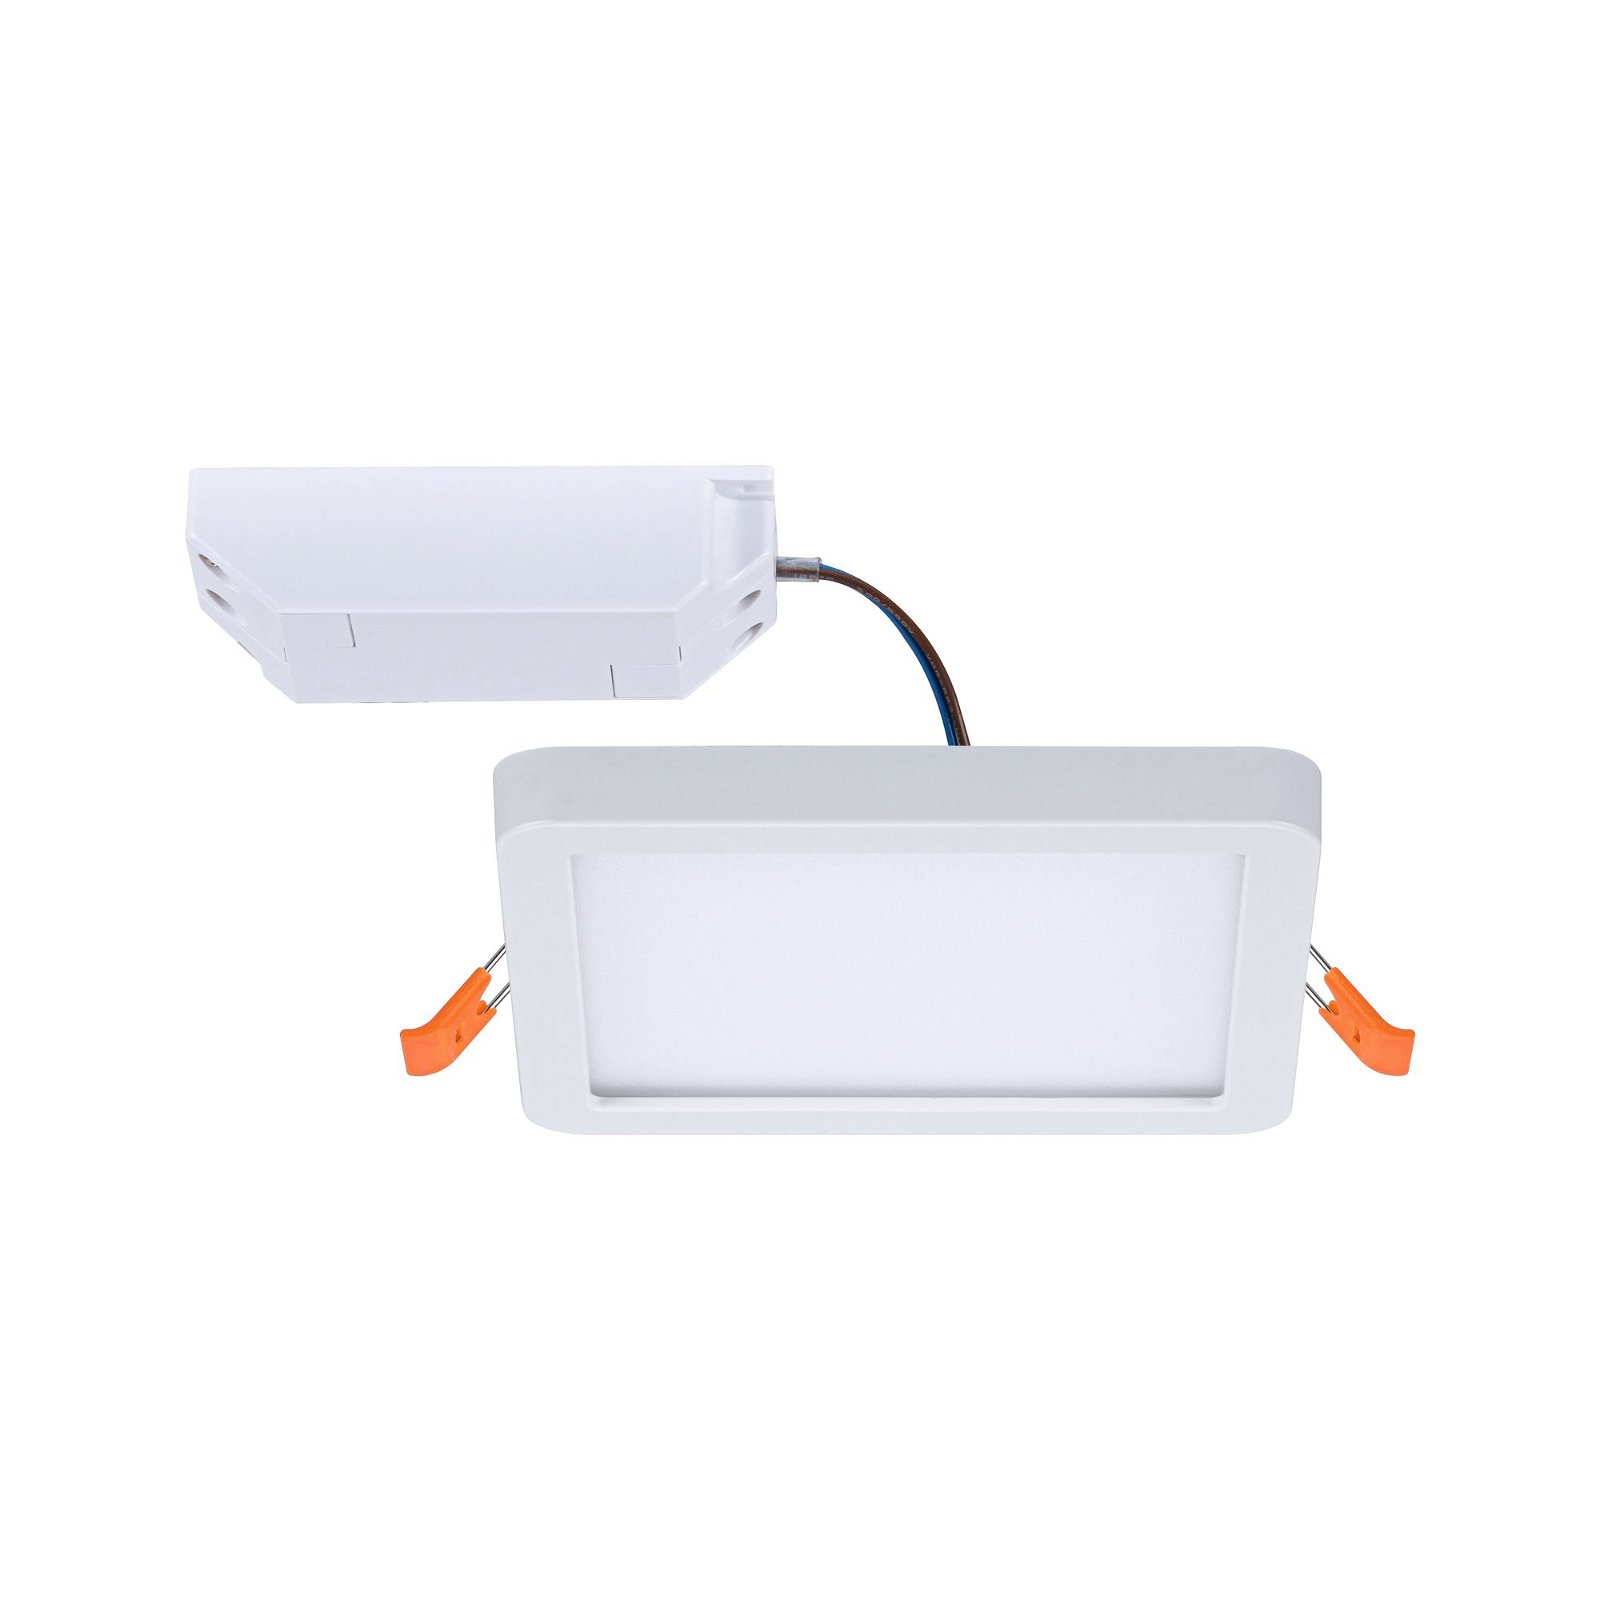 VariFit LED Recessed panel Areo IP44 square 118x118mm 6,5W 500lm 3000K White